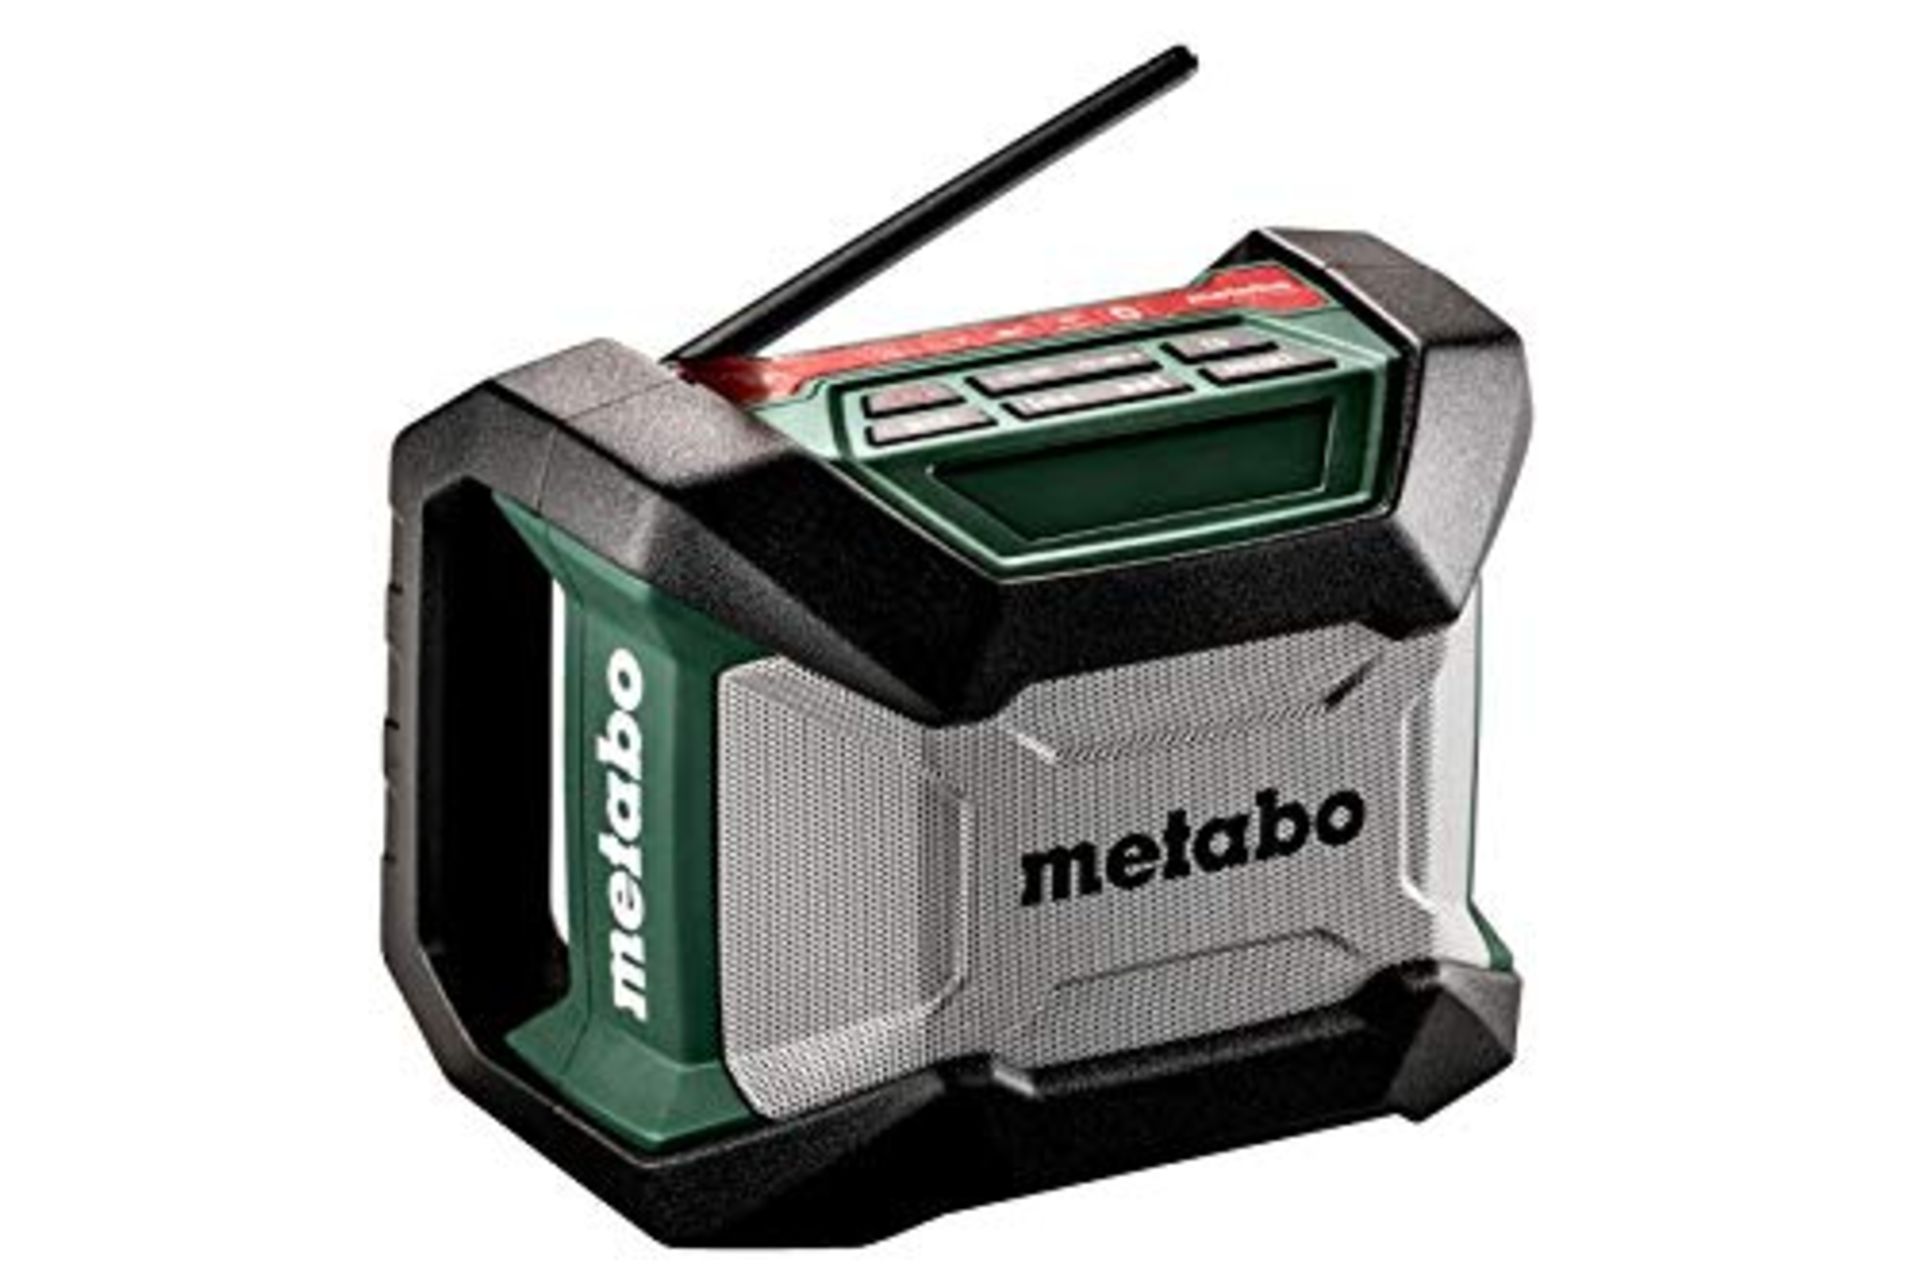 1 x Metabo R 12-18 BT (600777380) Cordless Worksite Radio (Bare Unit) | EAN: 4007430336576 | RRP £66